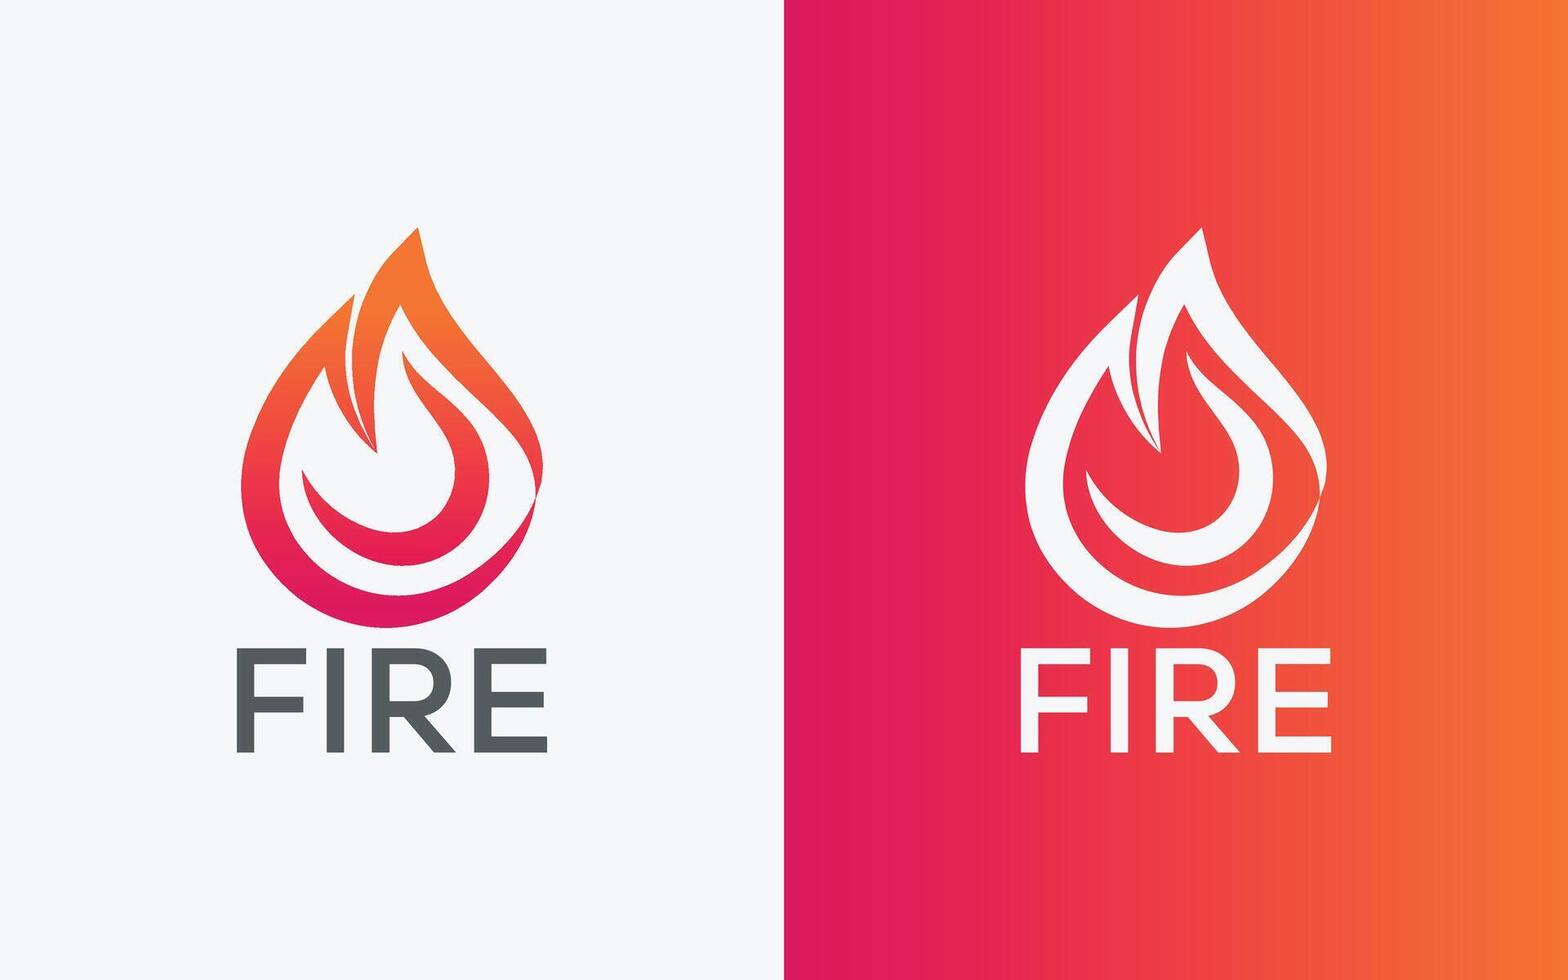 minimaliste Feu flamme vecteur logo. moderne coloré feu vecteur logo. abstrait coloré Feu logo